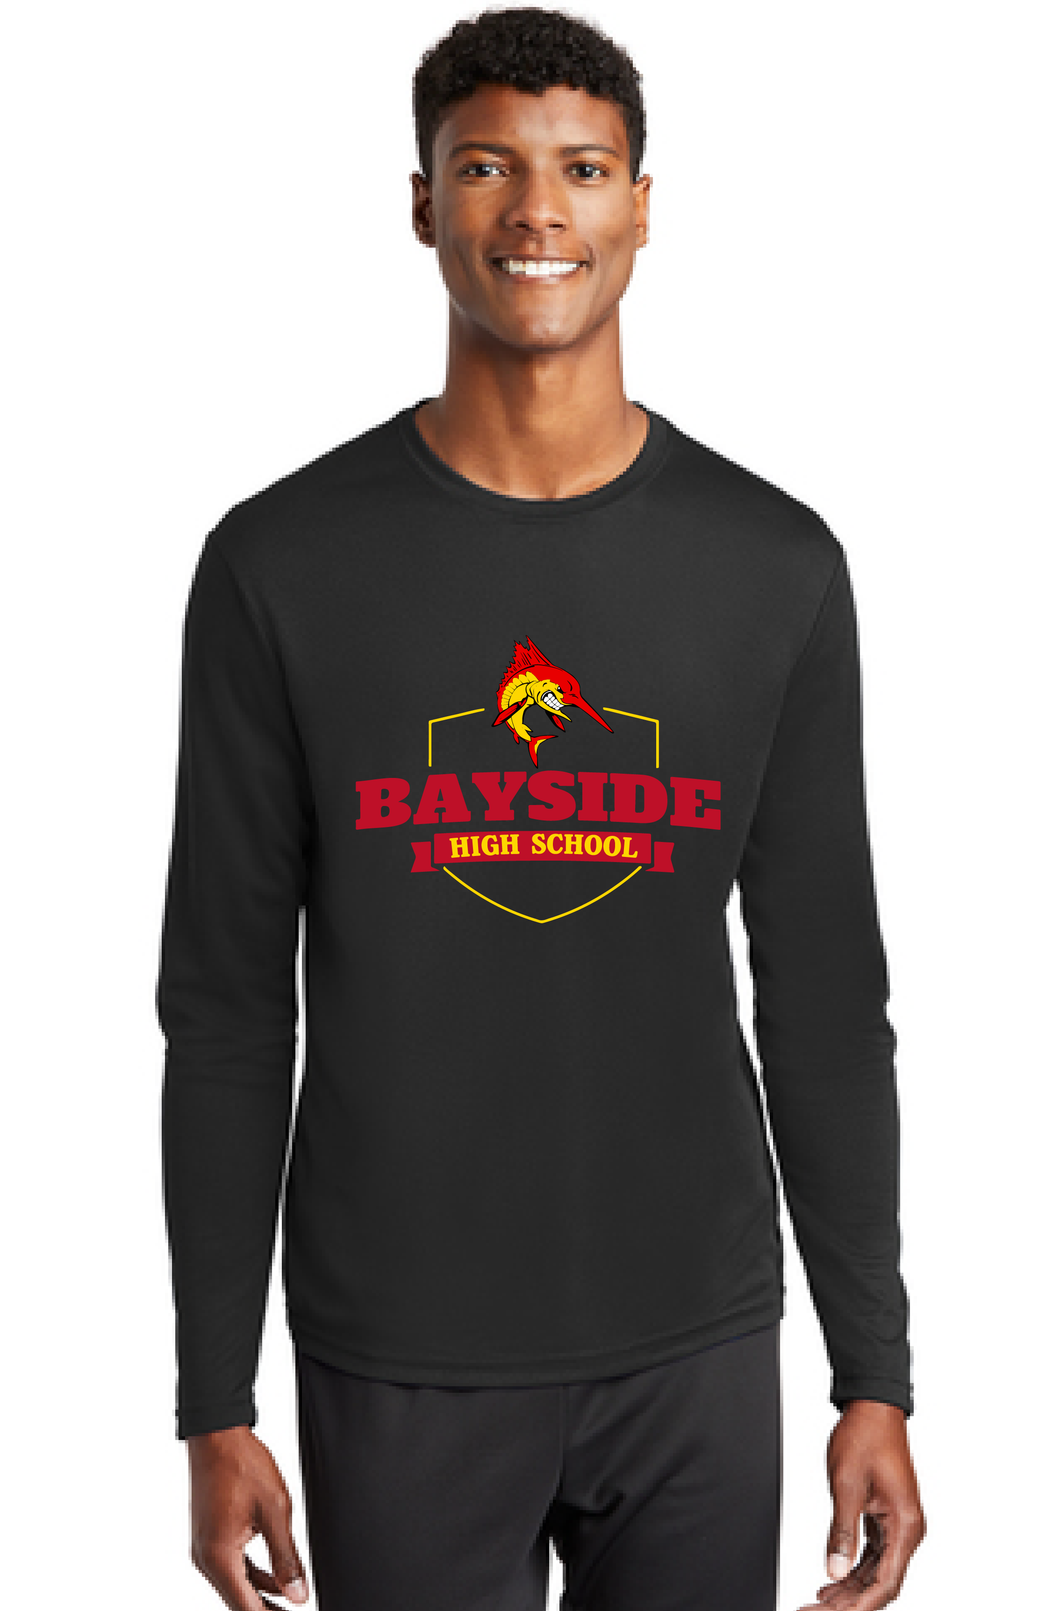 Performance Long Sleeve T-Shirt / Black / Bayside High School Soccer